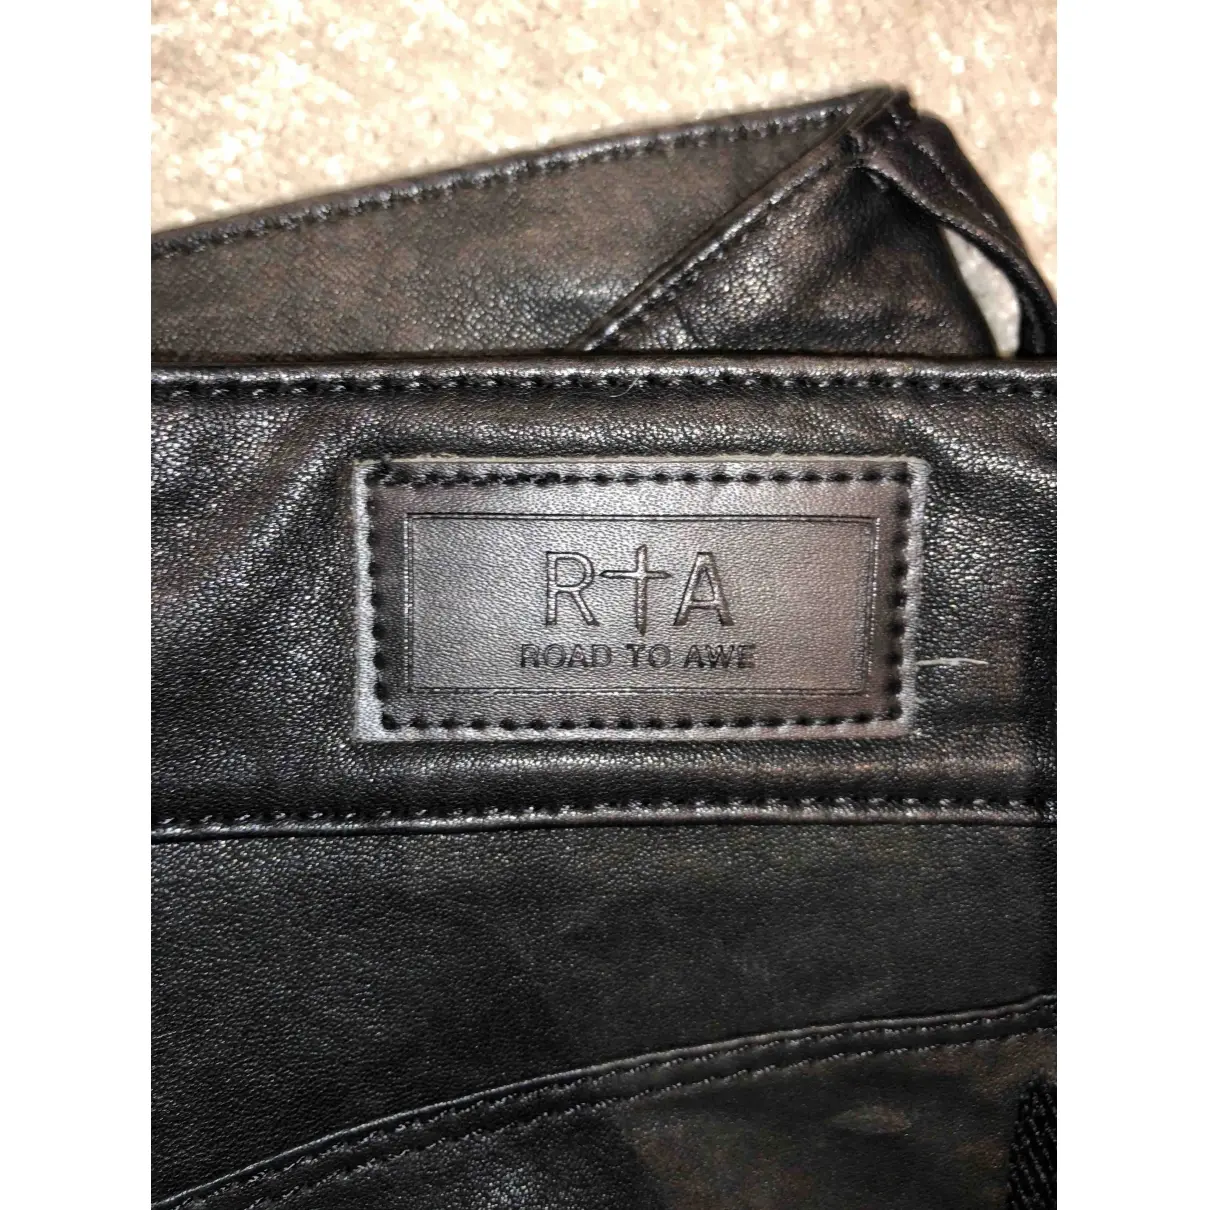 Buy Rta Leather slim pants online